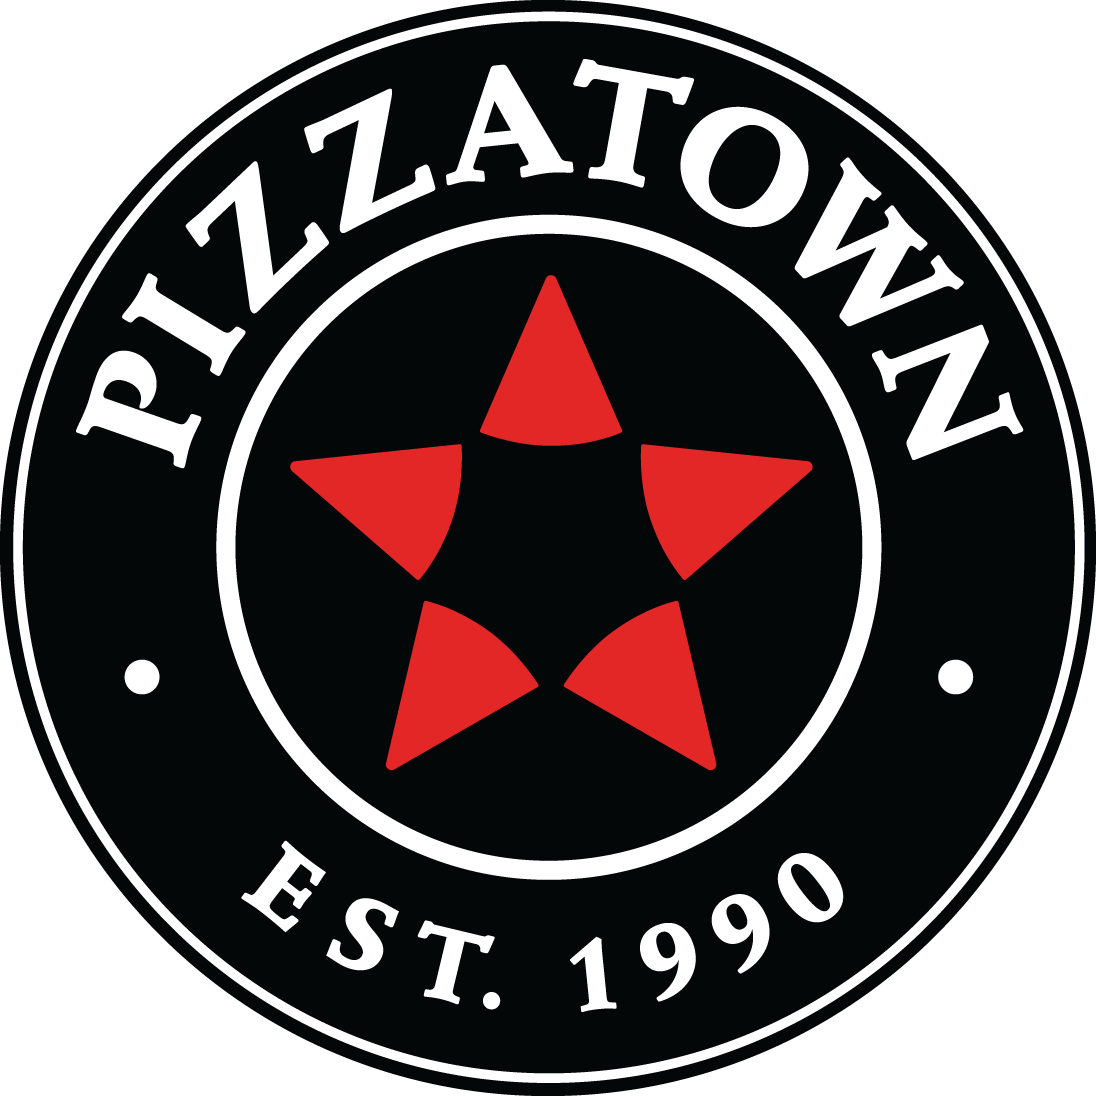 Pizzatown Original